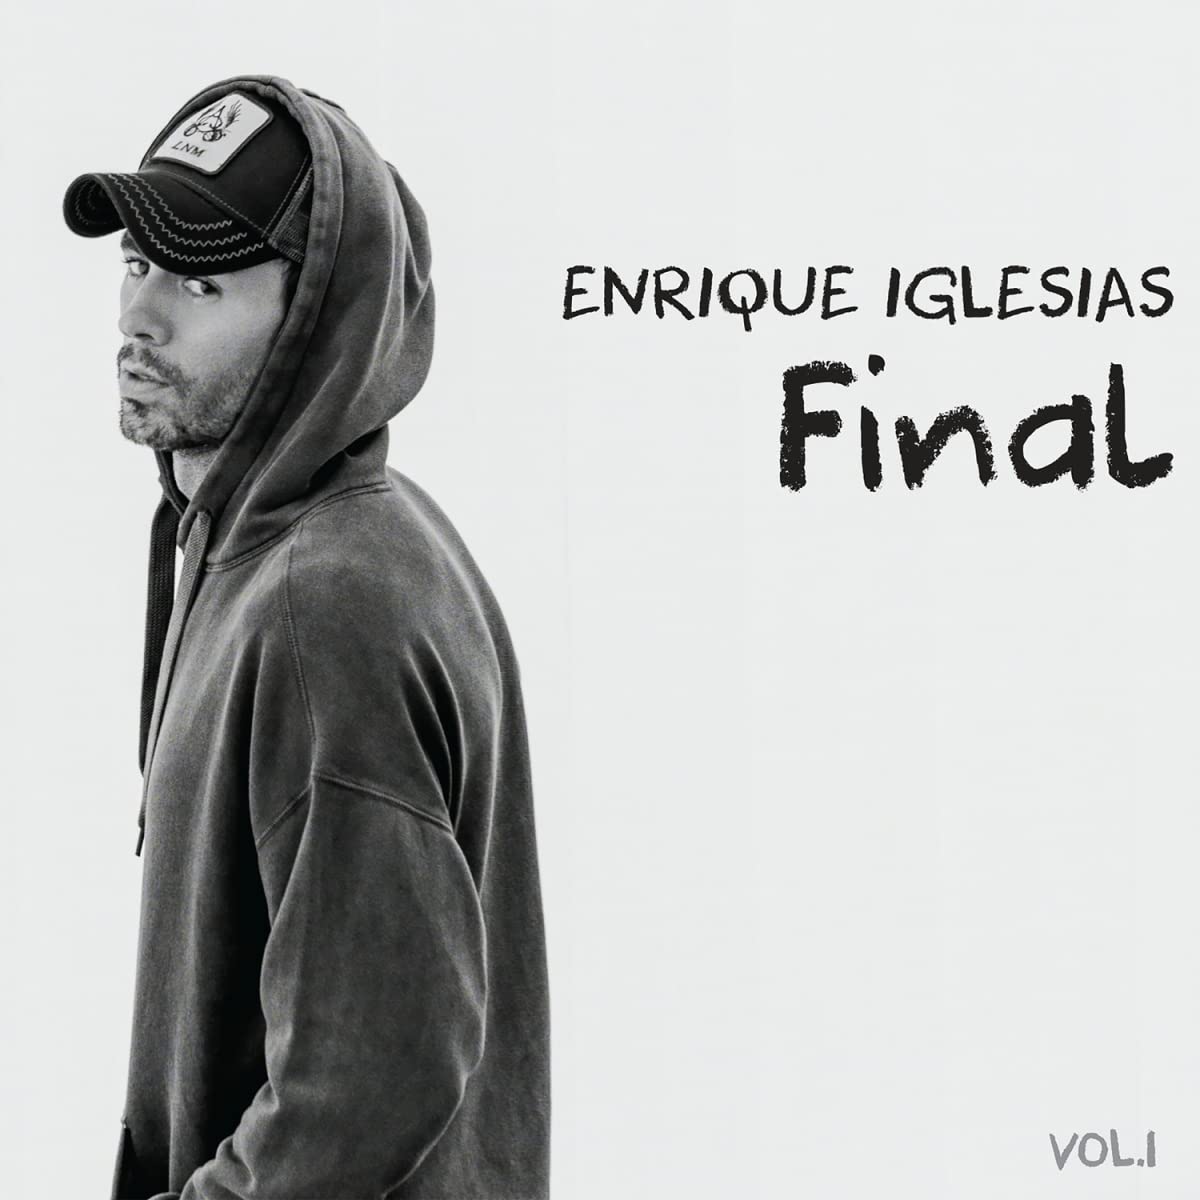 Enrique Iglesias - Final Vol. 1 (2021) [FLAC] Download